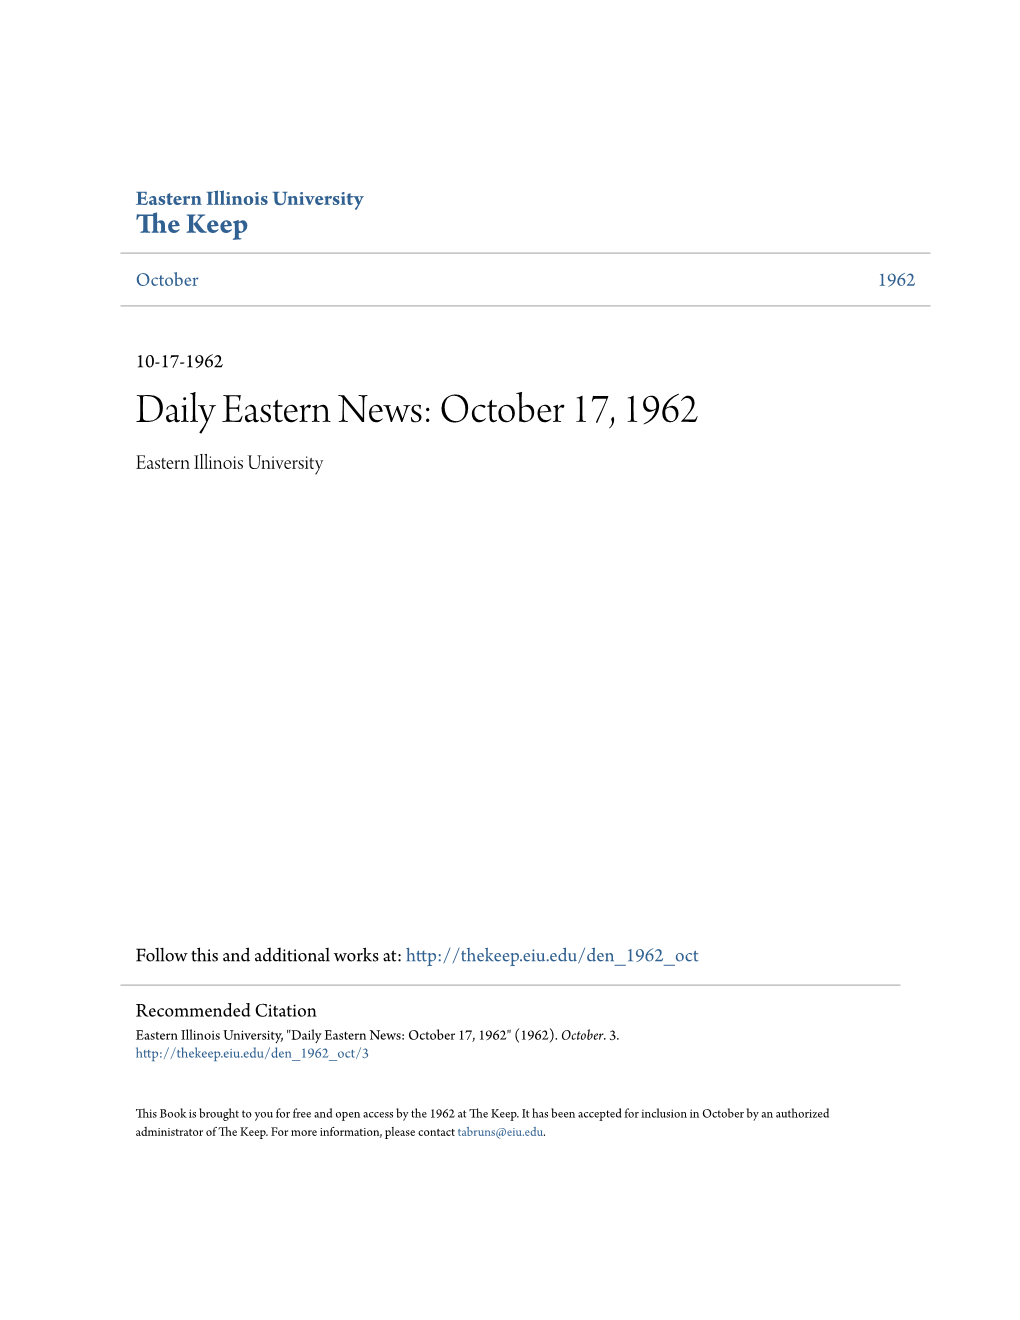 Daily Eastern News: October 17, 1962 Eastern Illinois University